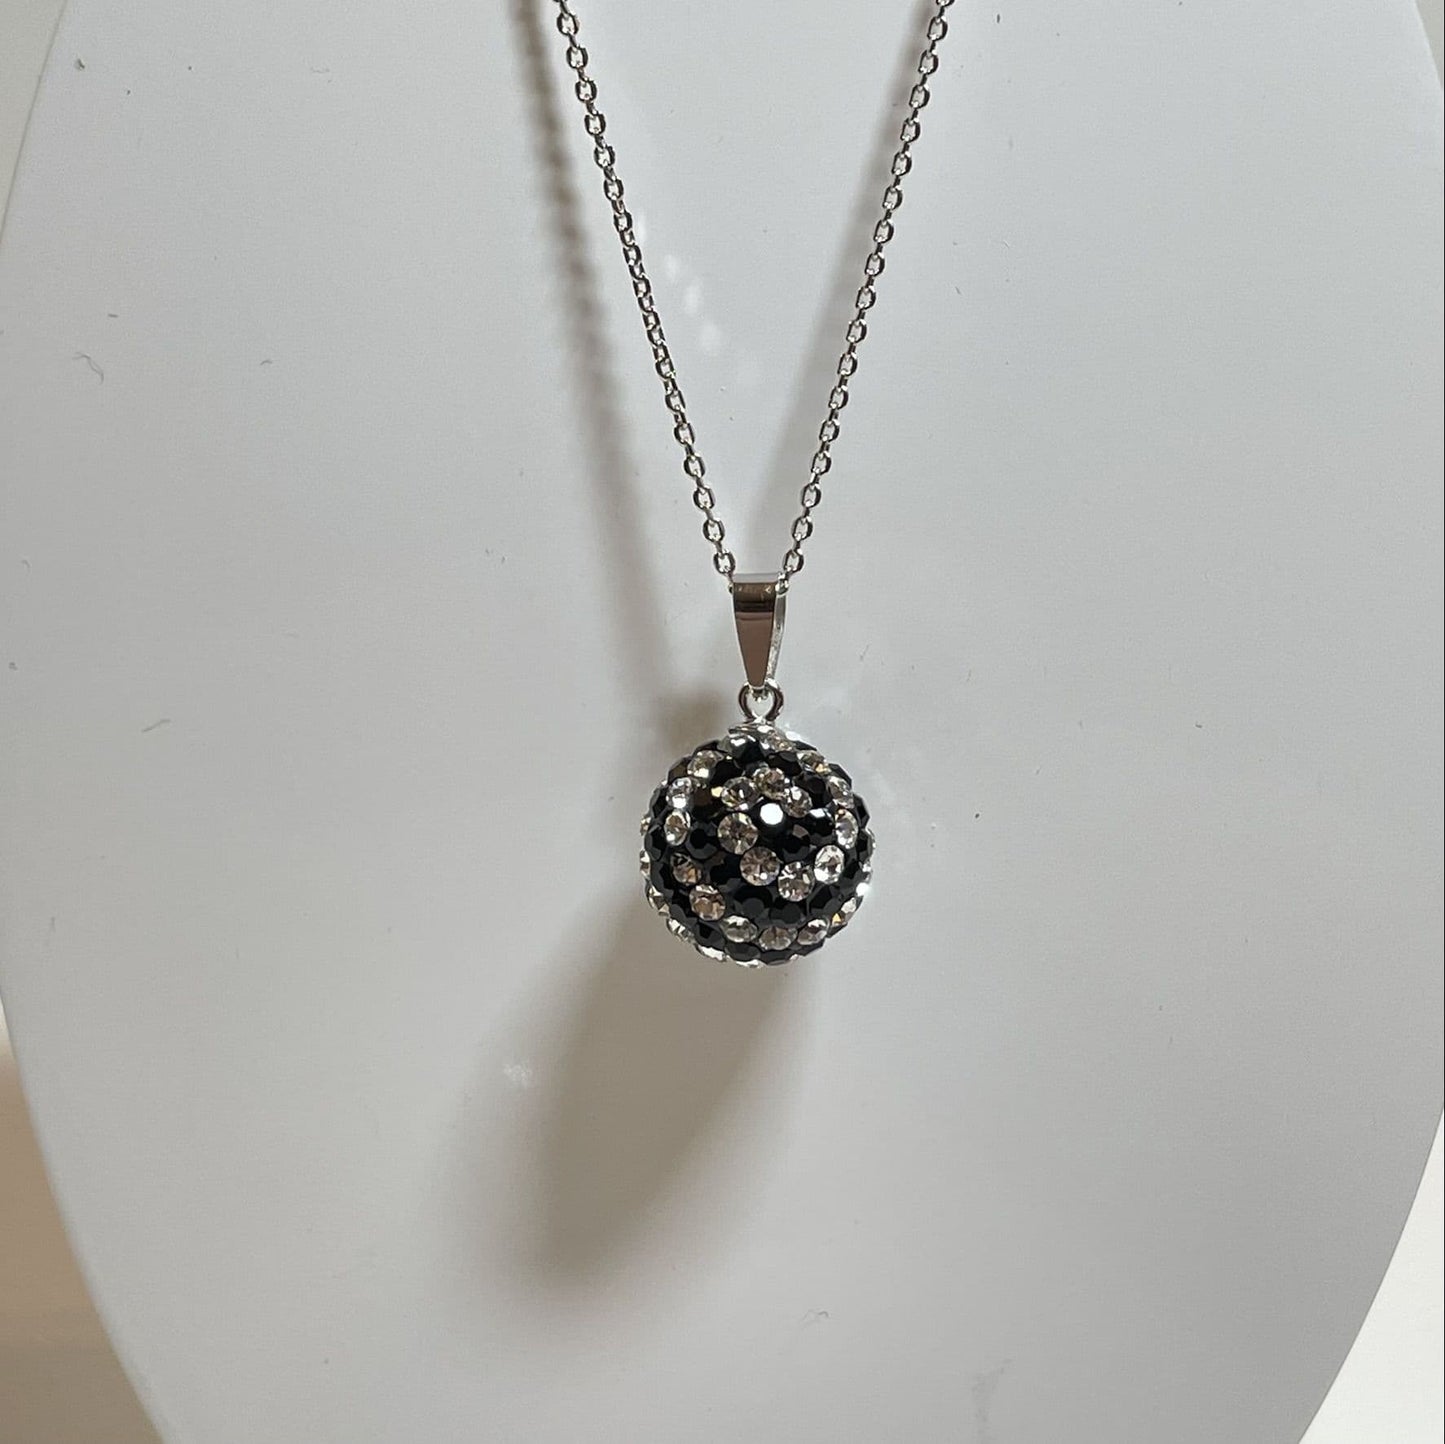 Tresor Paris crystal necklace 12 mm white and black bon bon round disco glitter ball pendant